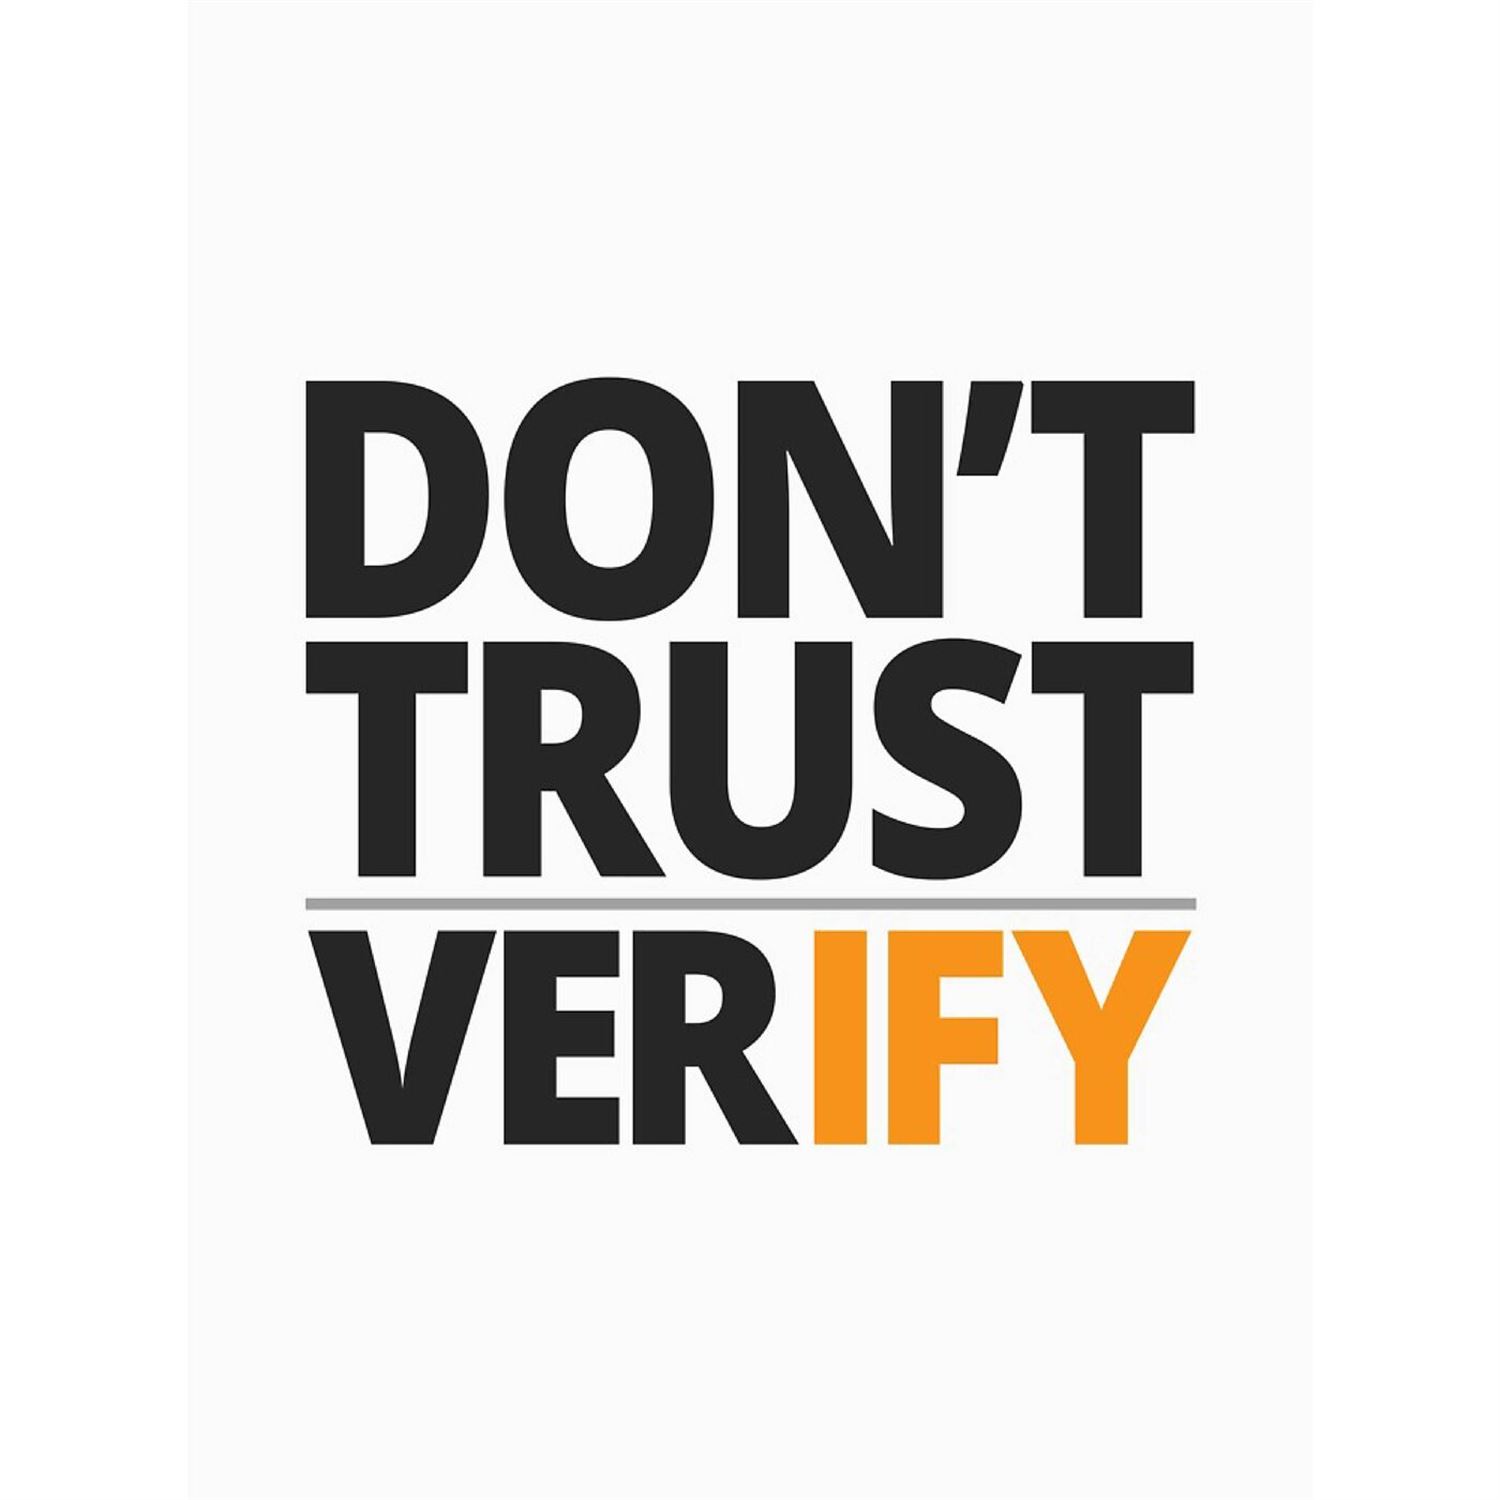 Don't trust, verify